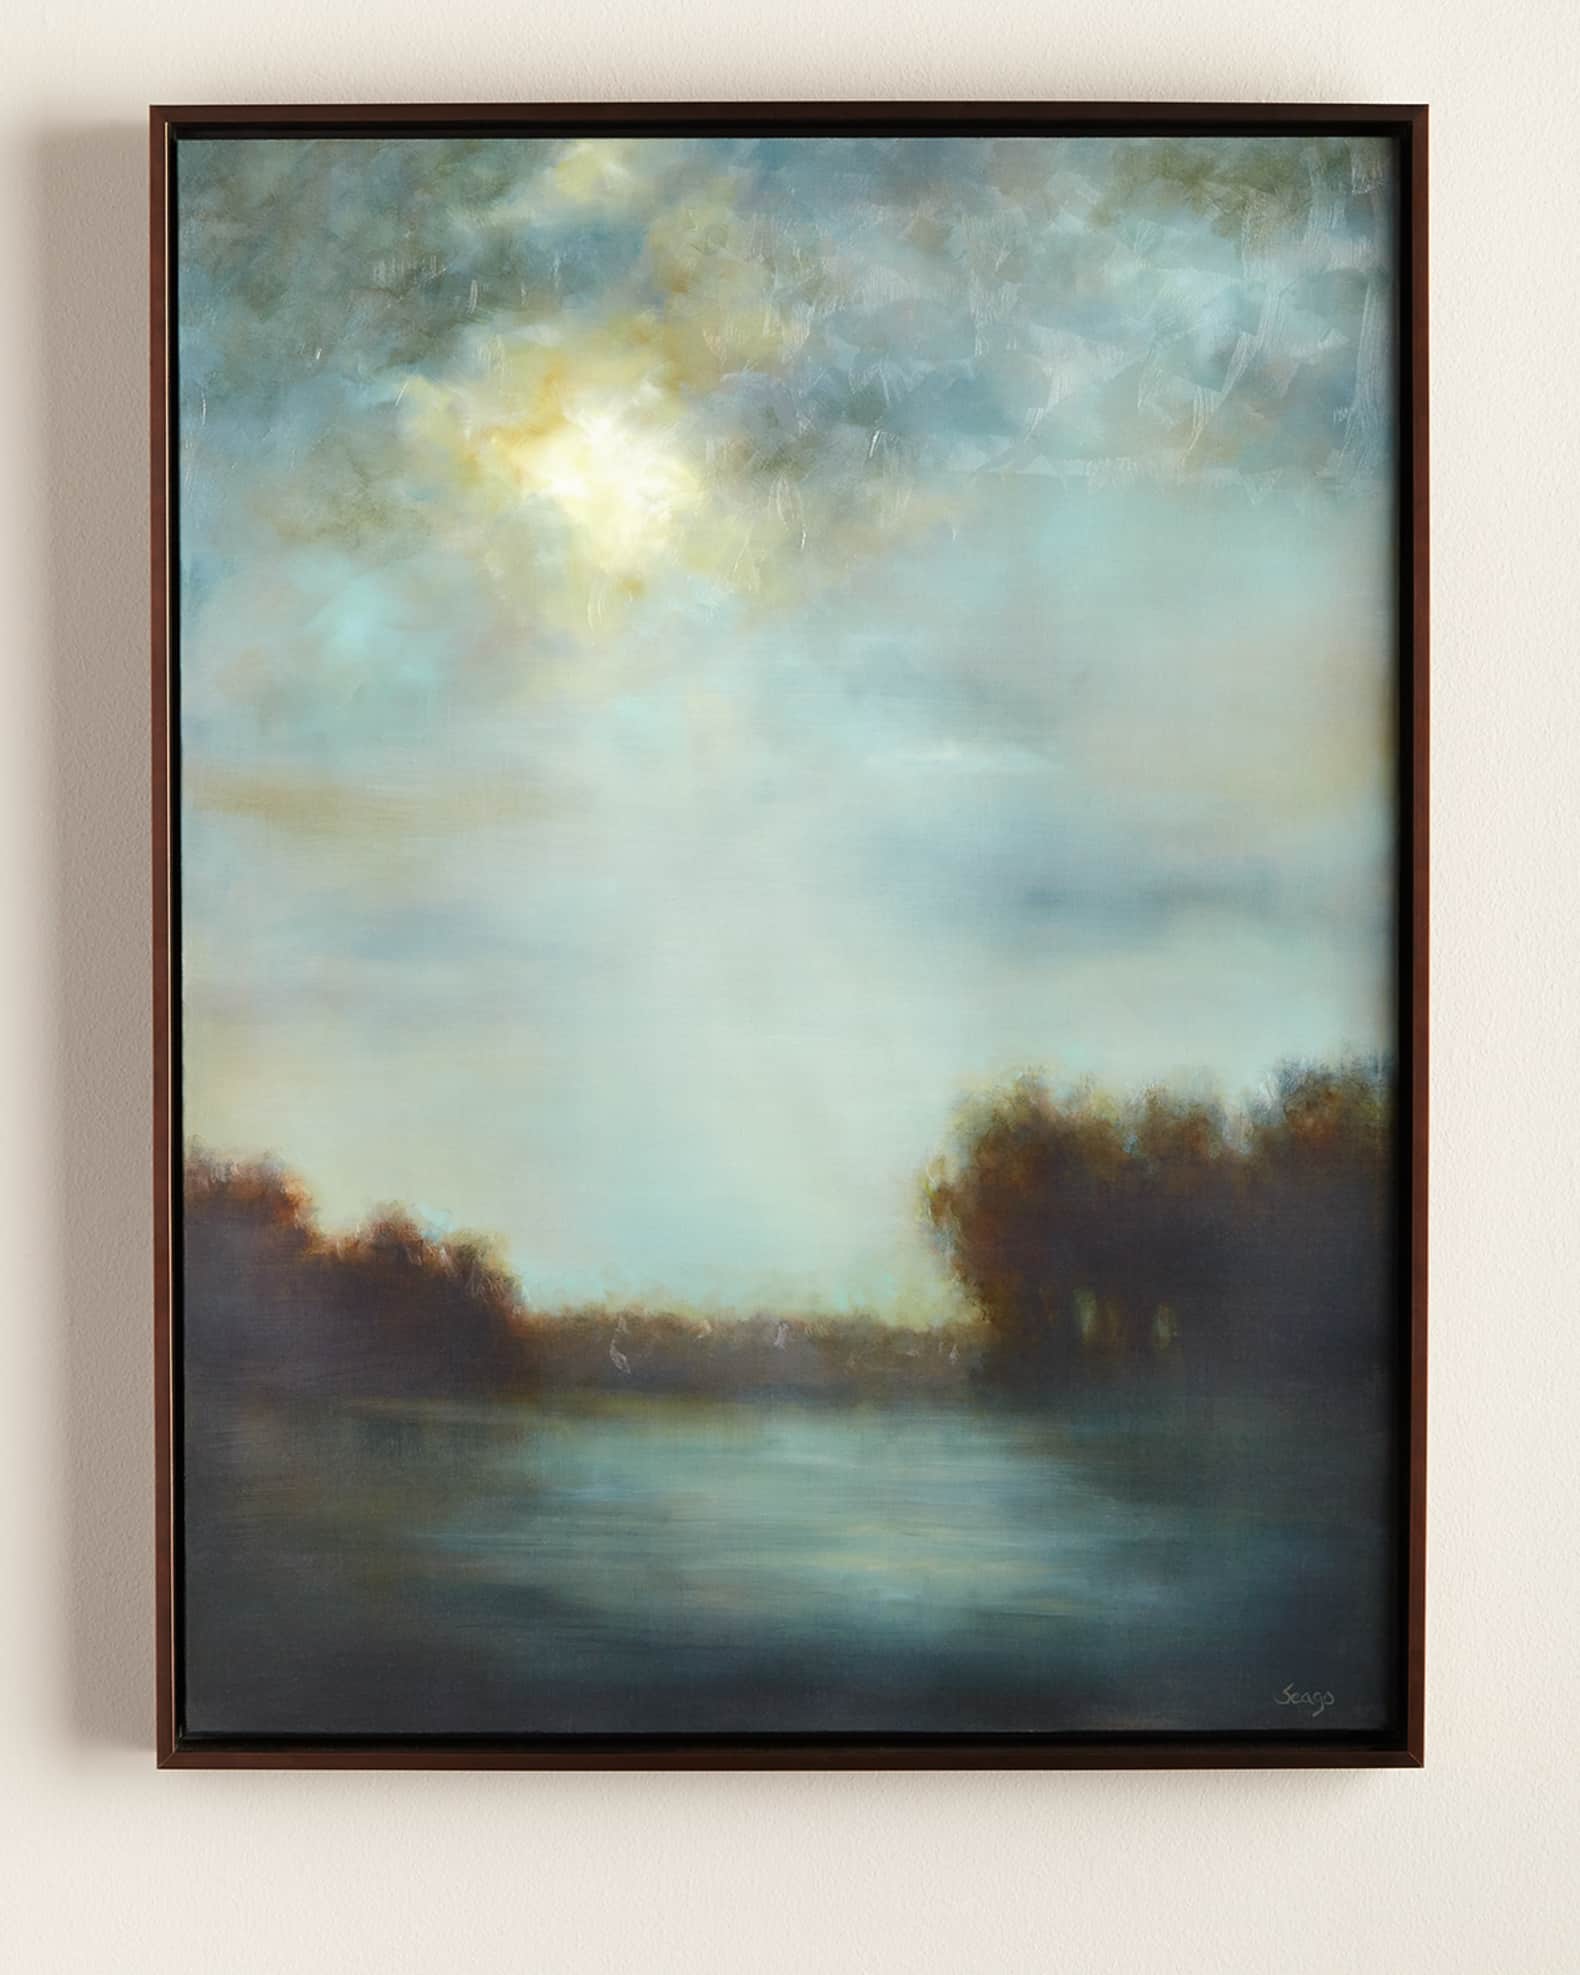 John-Richard Collection "Breaking Light" Giclee on Canvas Wall Art by Lisa Seago